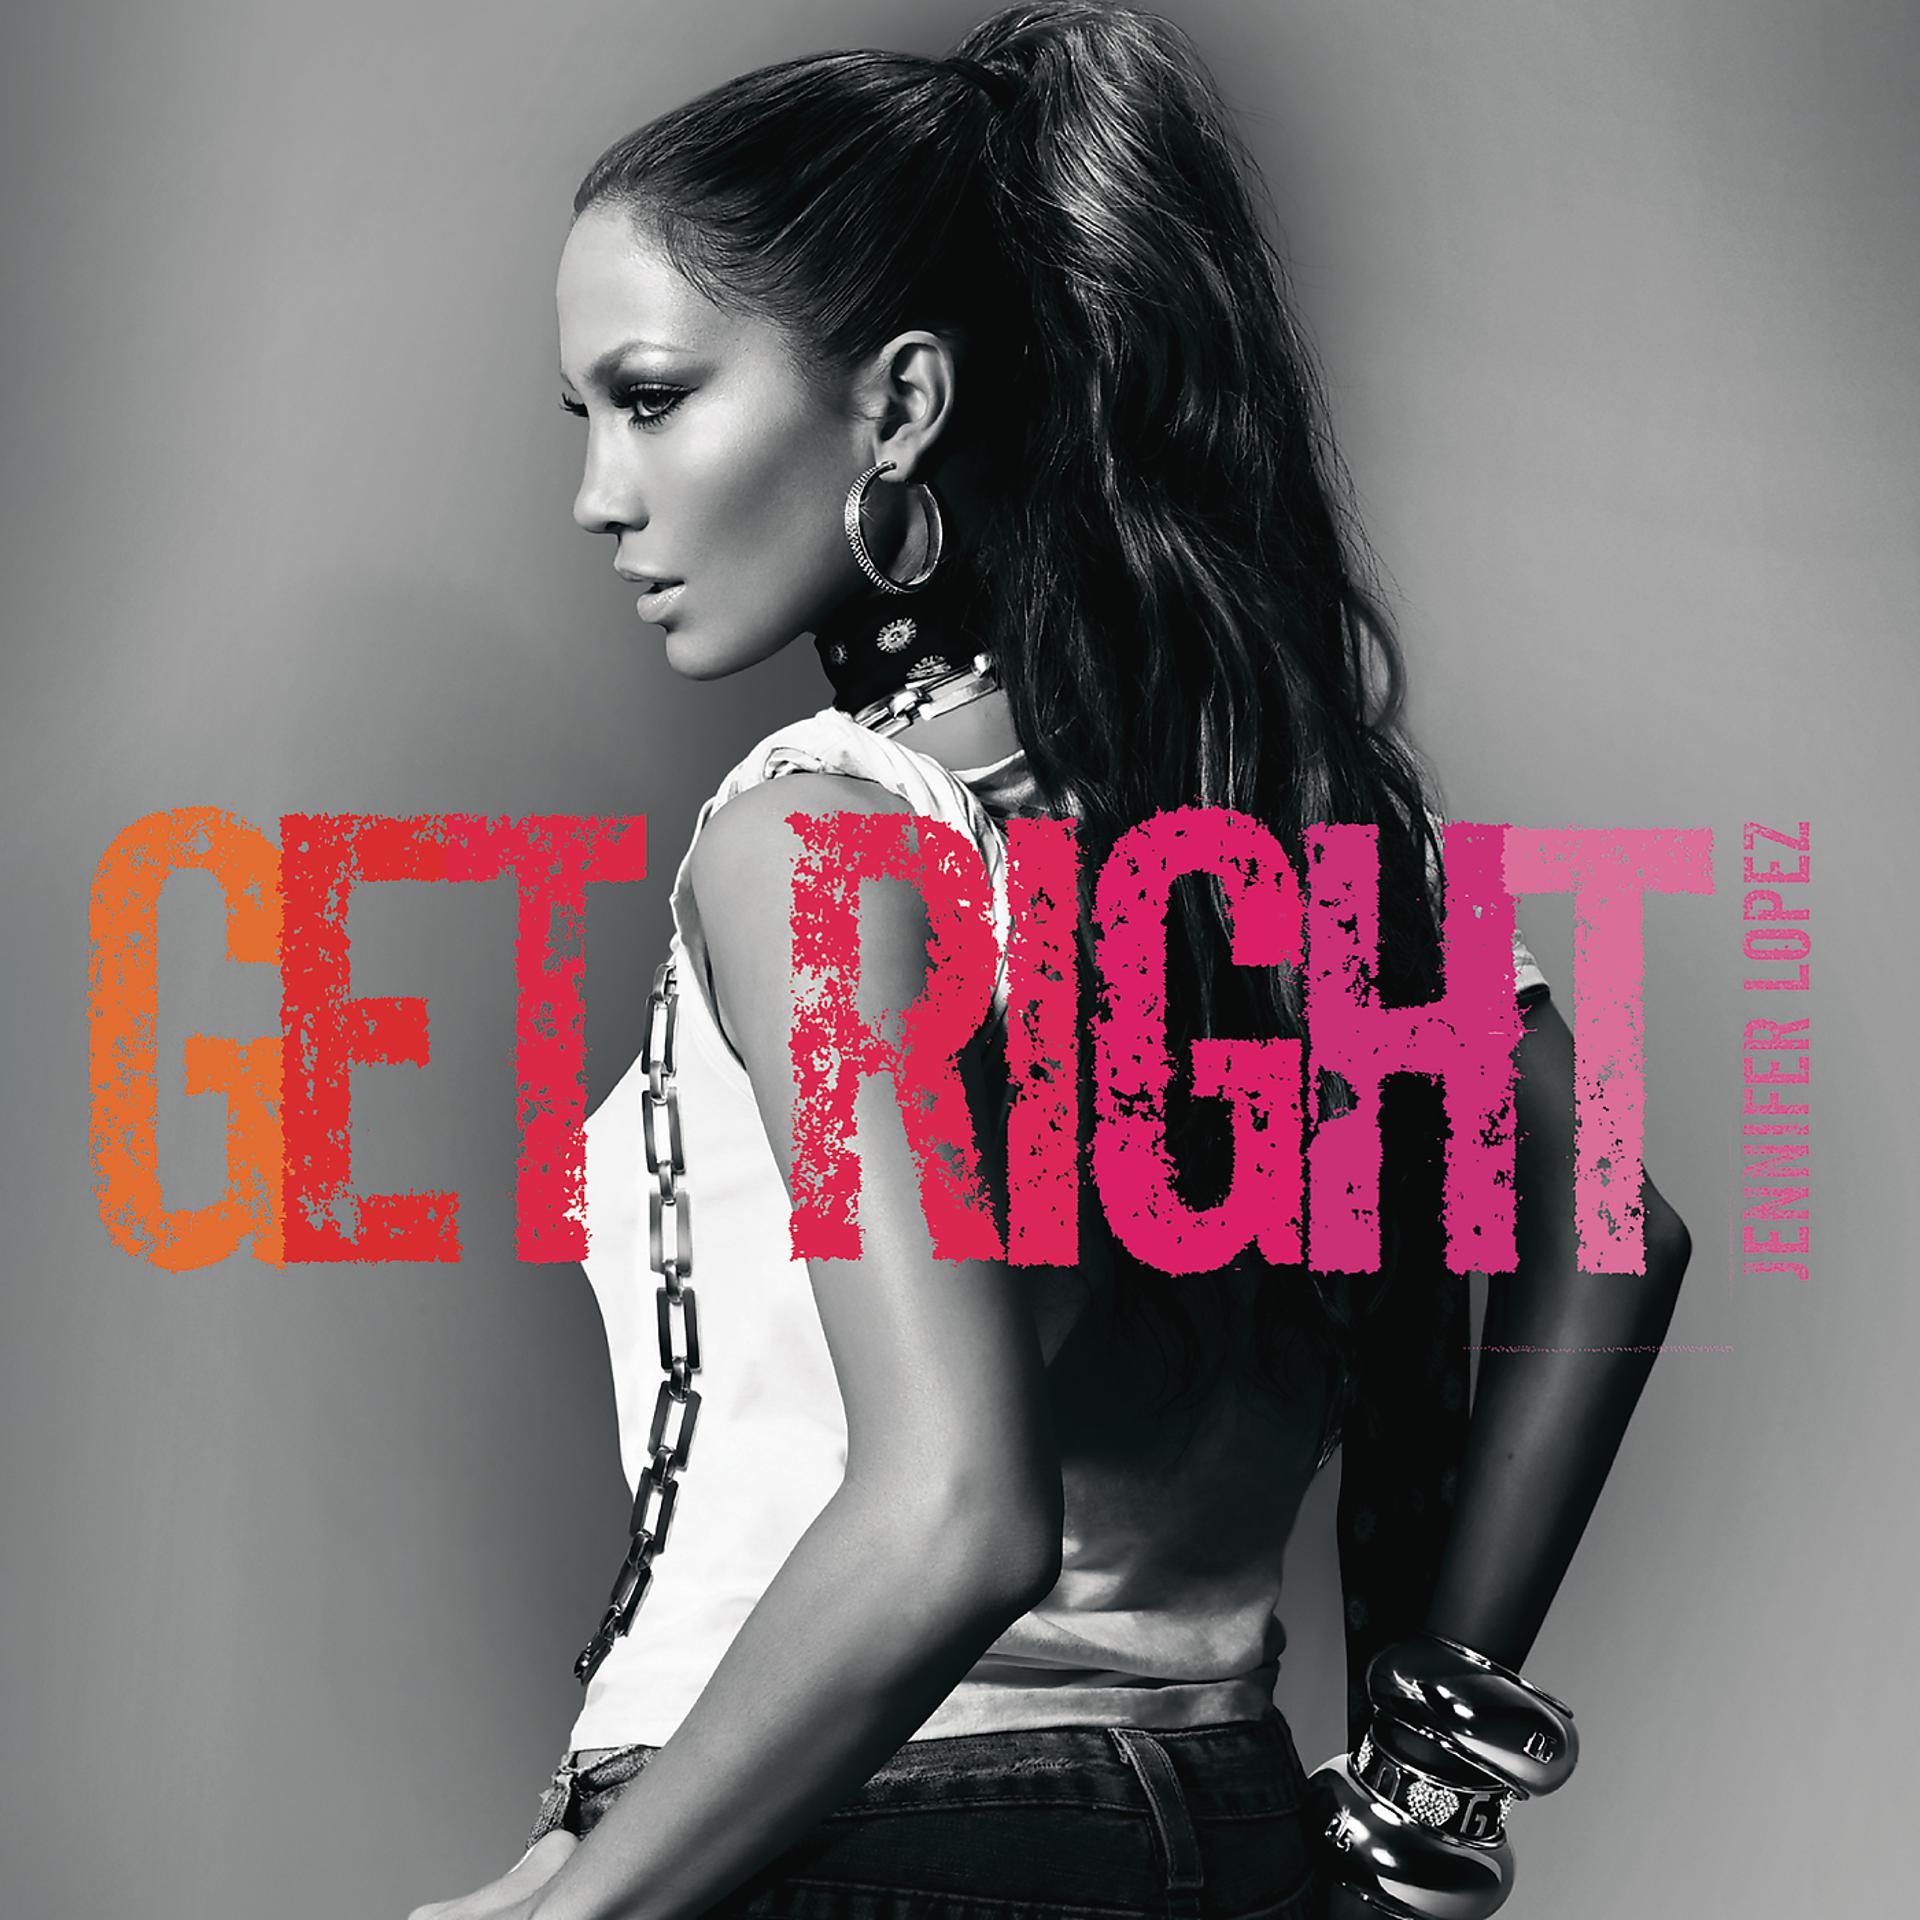 Get right Jennifer Lopez обложка. Лучшие песни лопес